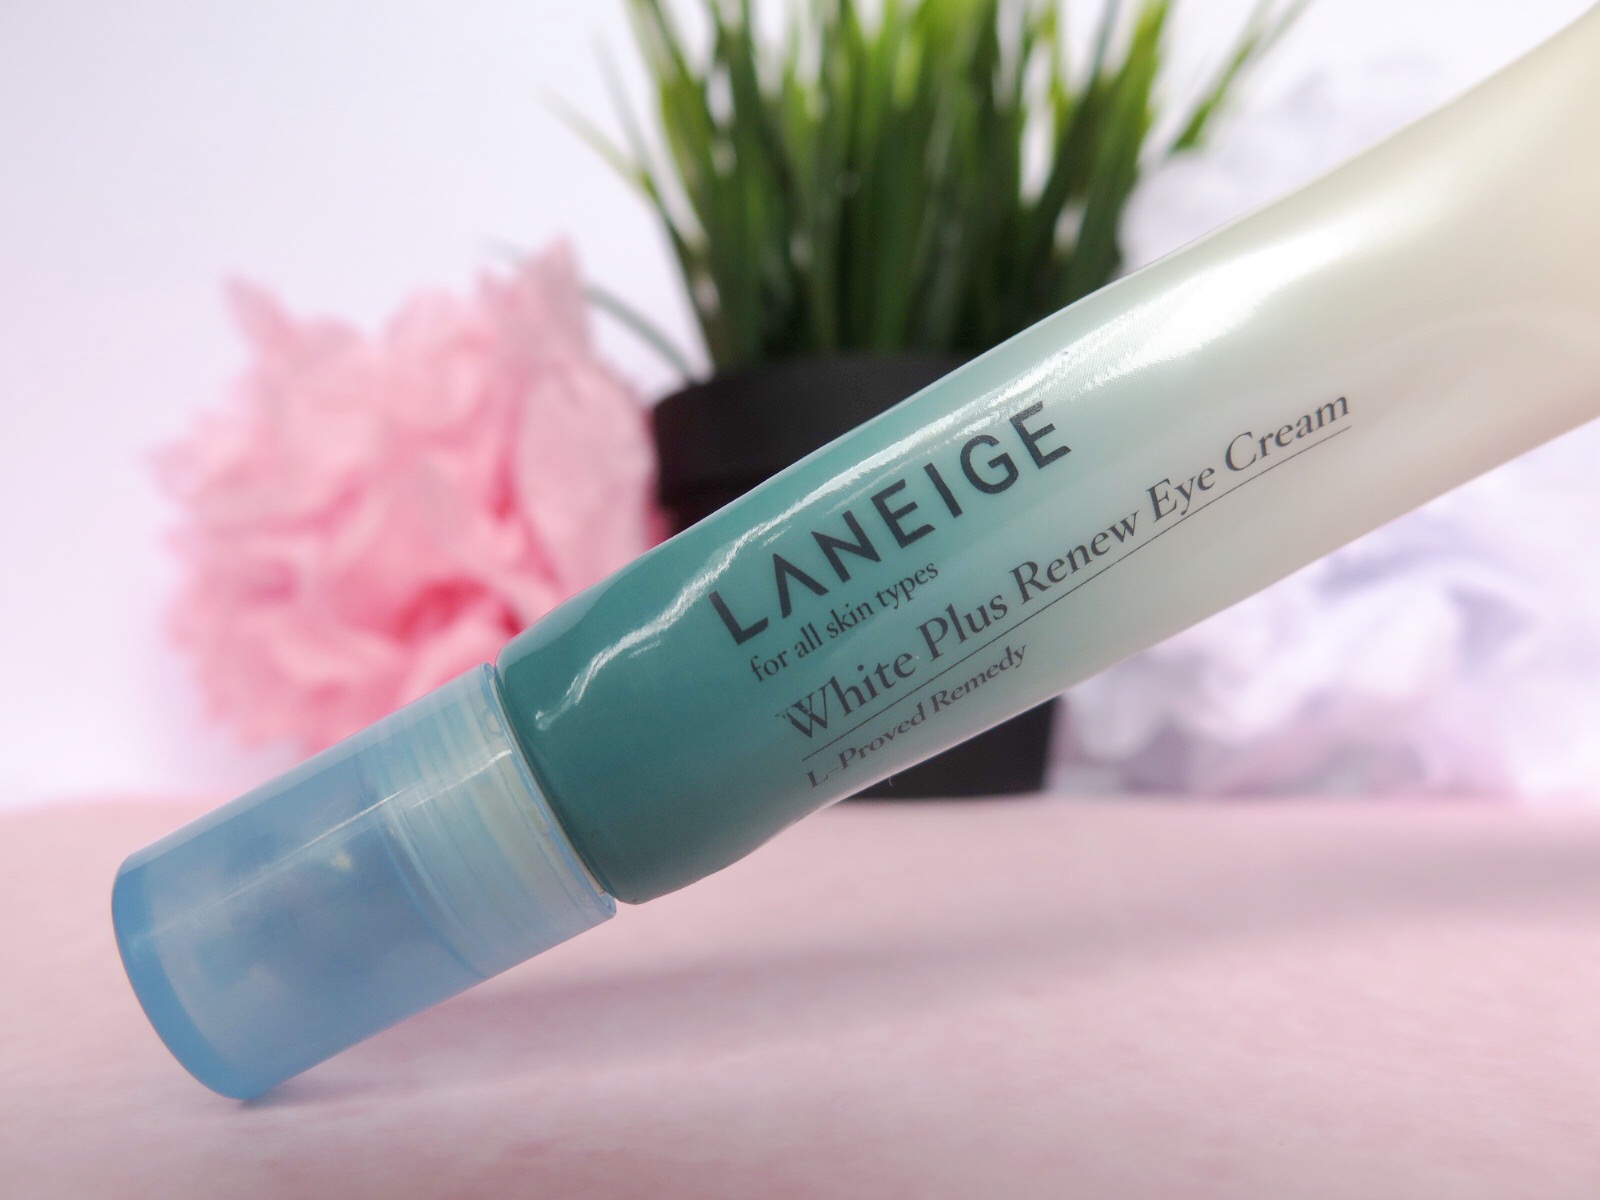 saving this skin : Review: Laneige White Plus Eye Cream | Singapore Beauty Blog